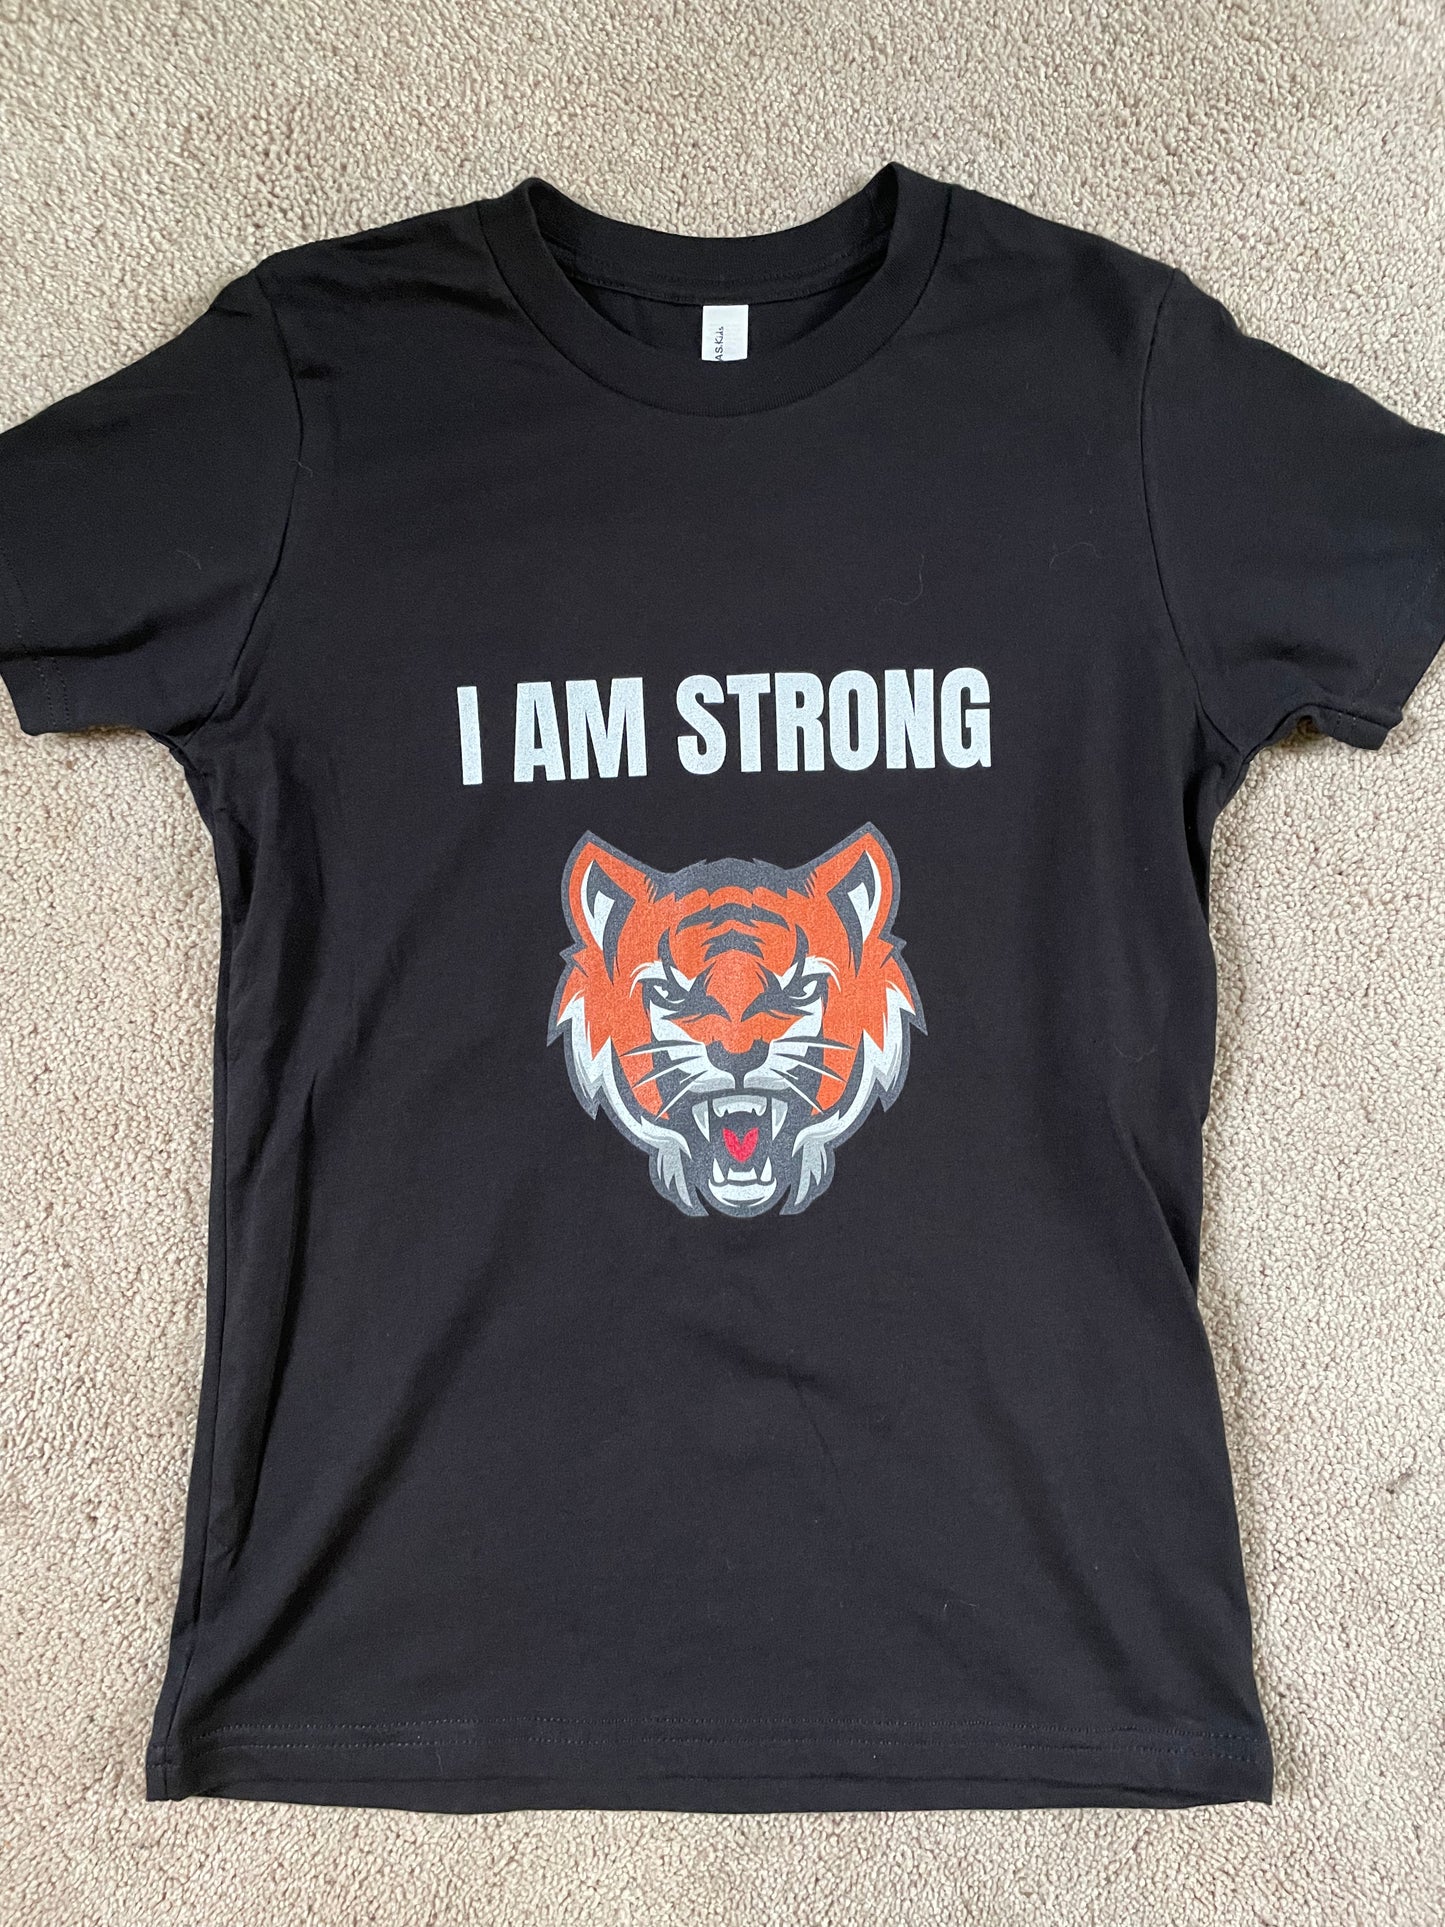 “I AM STRONG” black kids affirmation tee shirt